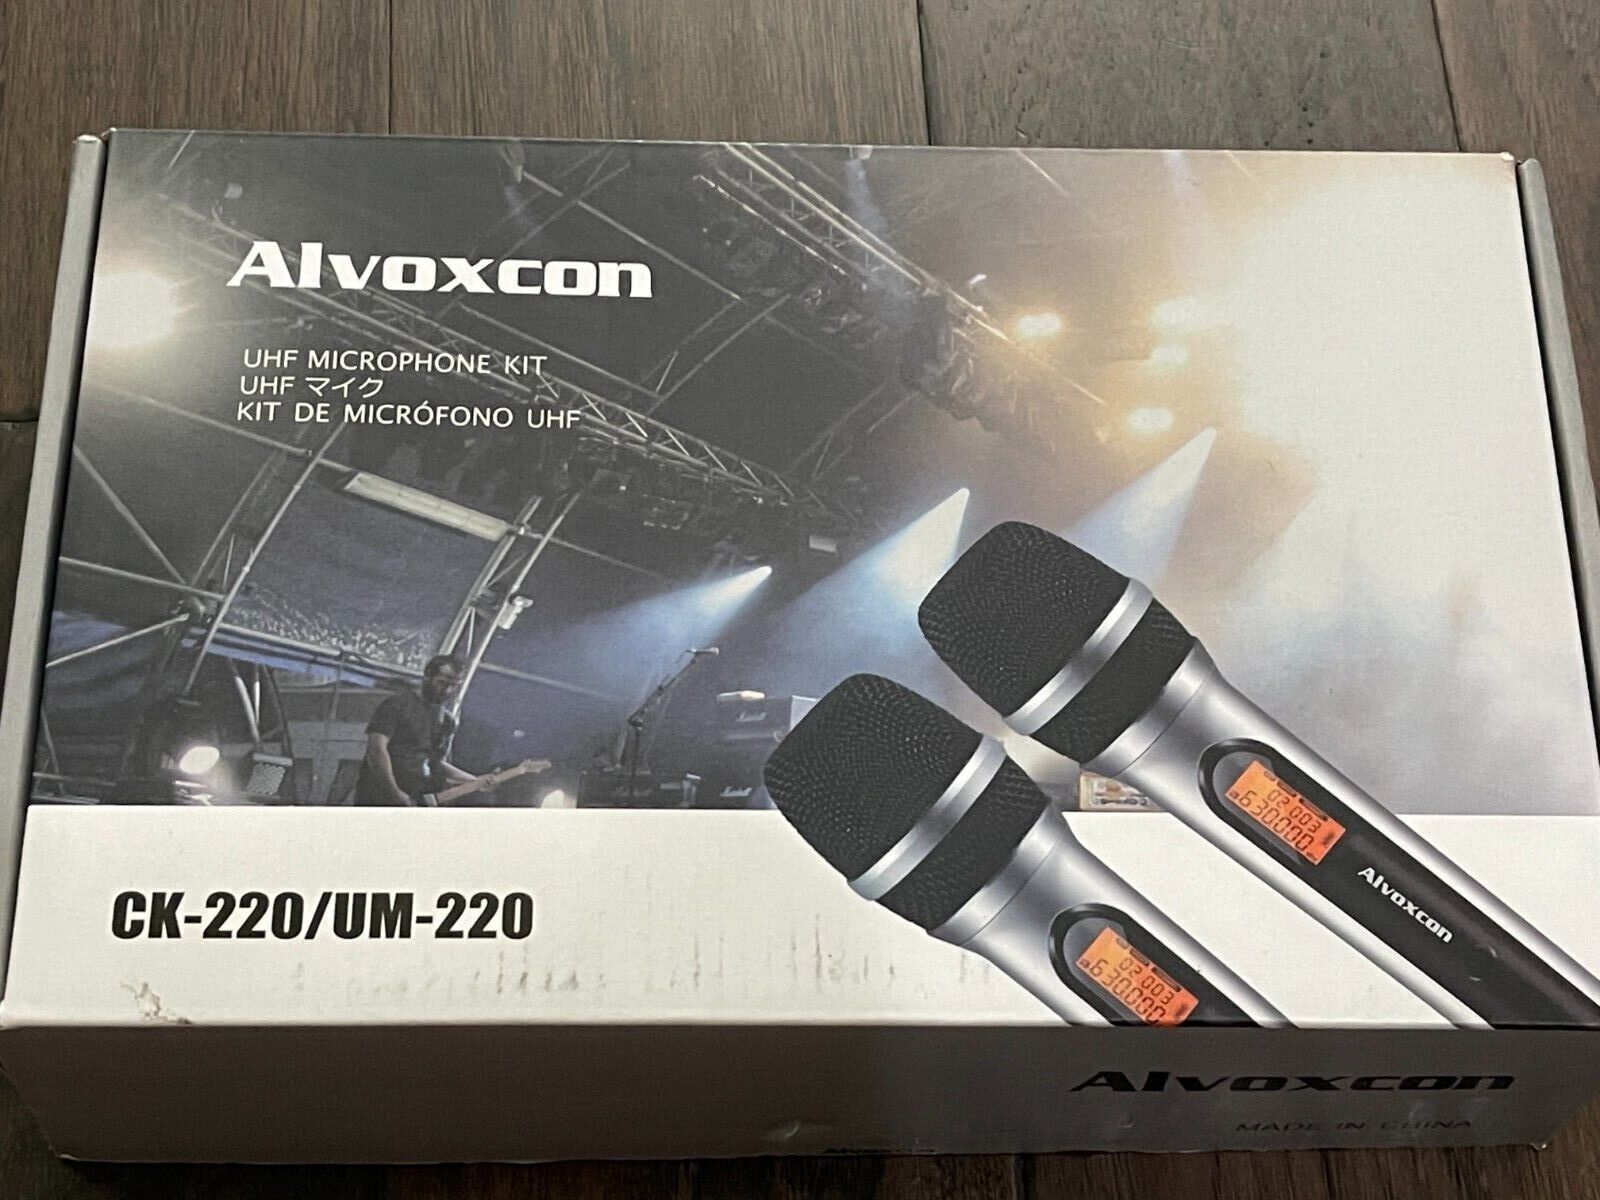 Alvoxcon Uhf Wireless Microphone System Kit Ck-220 Um-220 Opened Original Box